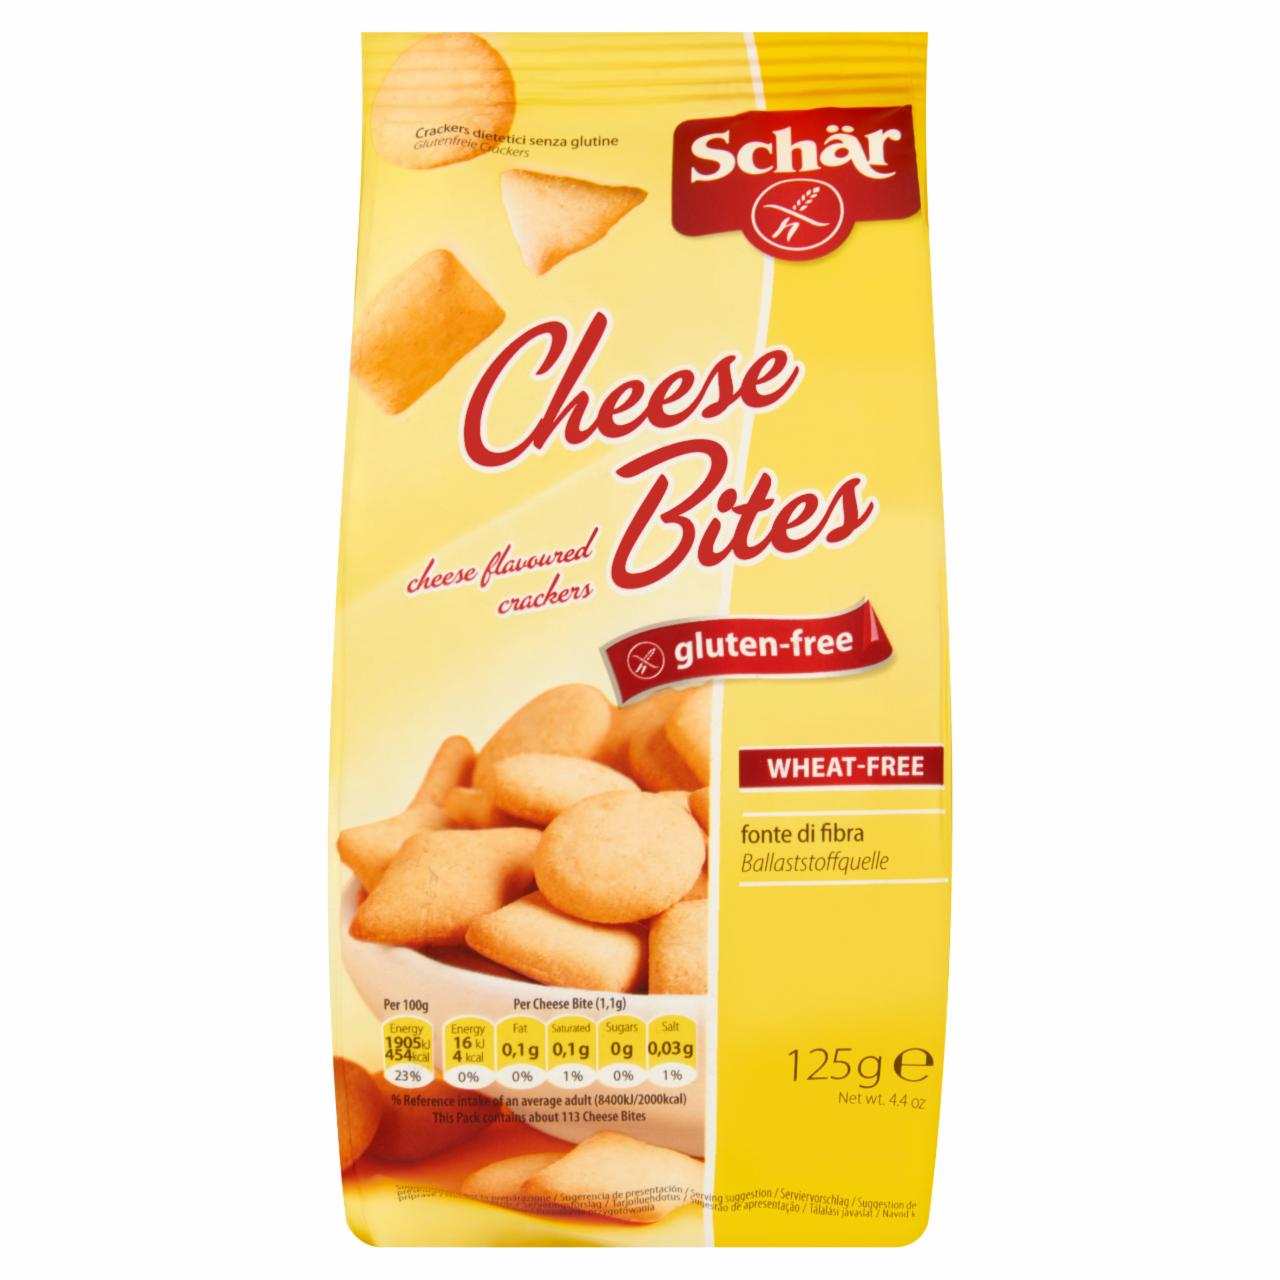 Képek - Schär Cheese Bites gluténmentes crackers 125 g